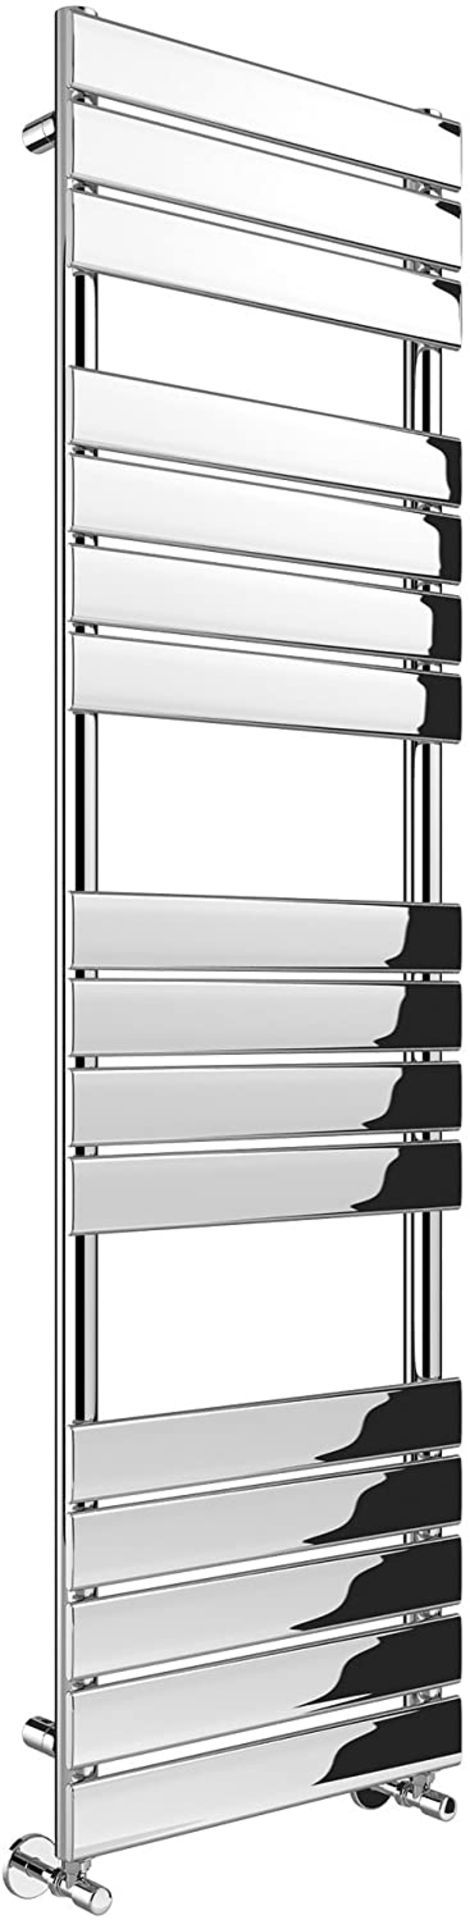 BRAND NEW BOXED 1600x450mm Chrome Straight Towel Radiator Ladder Modern Bathroom. RF1600450.... - Image 3 of 3